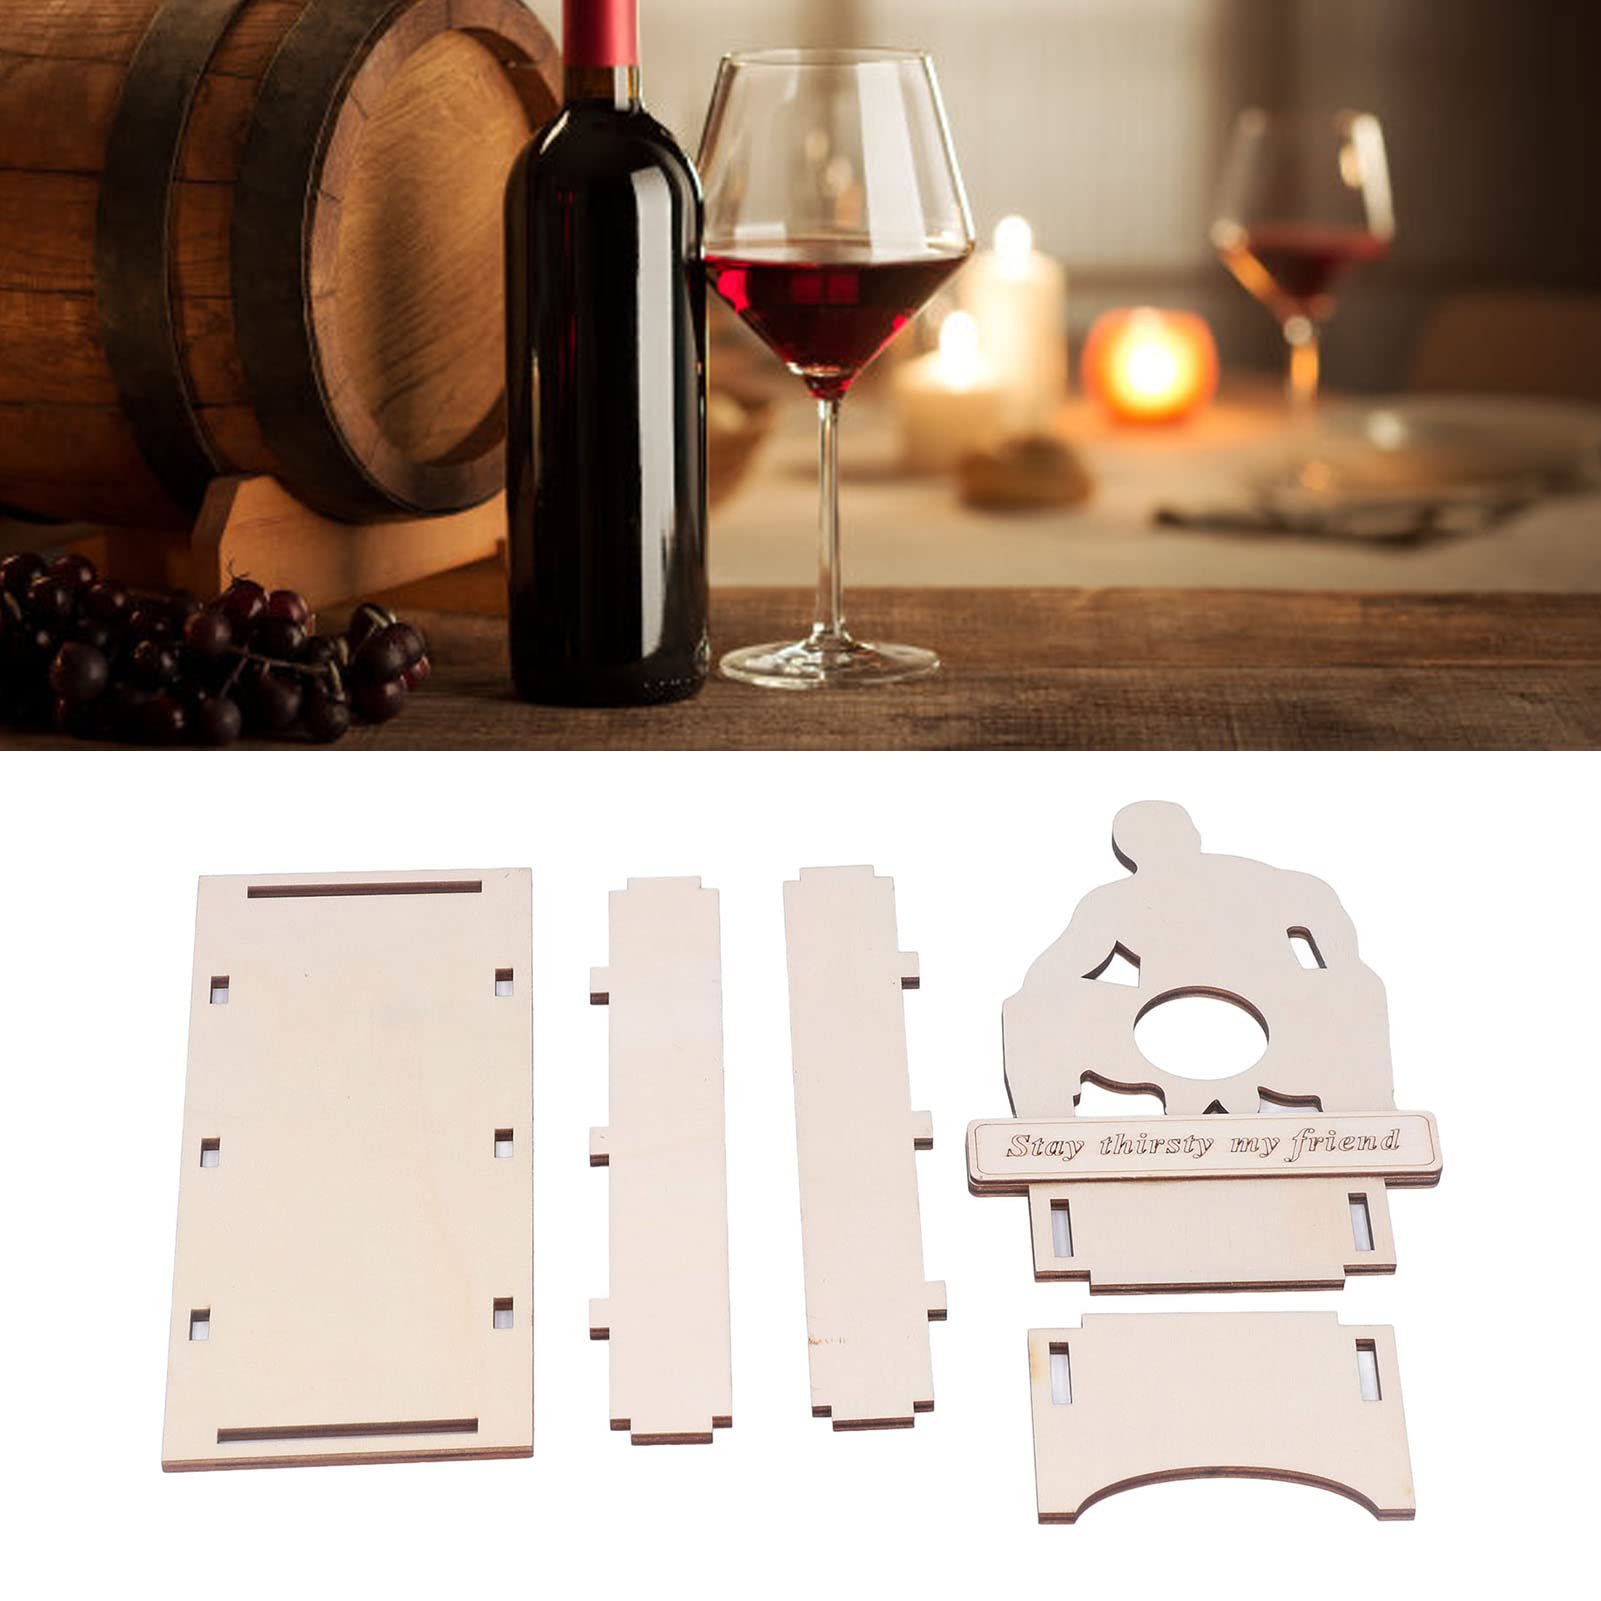 Red Wine Decorative Display Rack, Collection Wine Bottle Rack Holder for Home Bar Restaurant Hotel Wedding Present Gift (Wood Color)